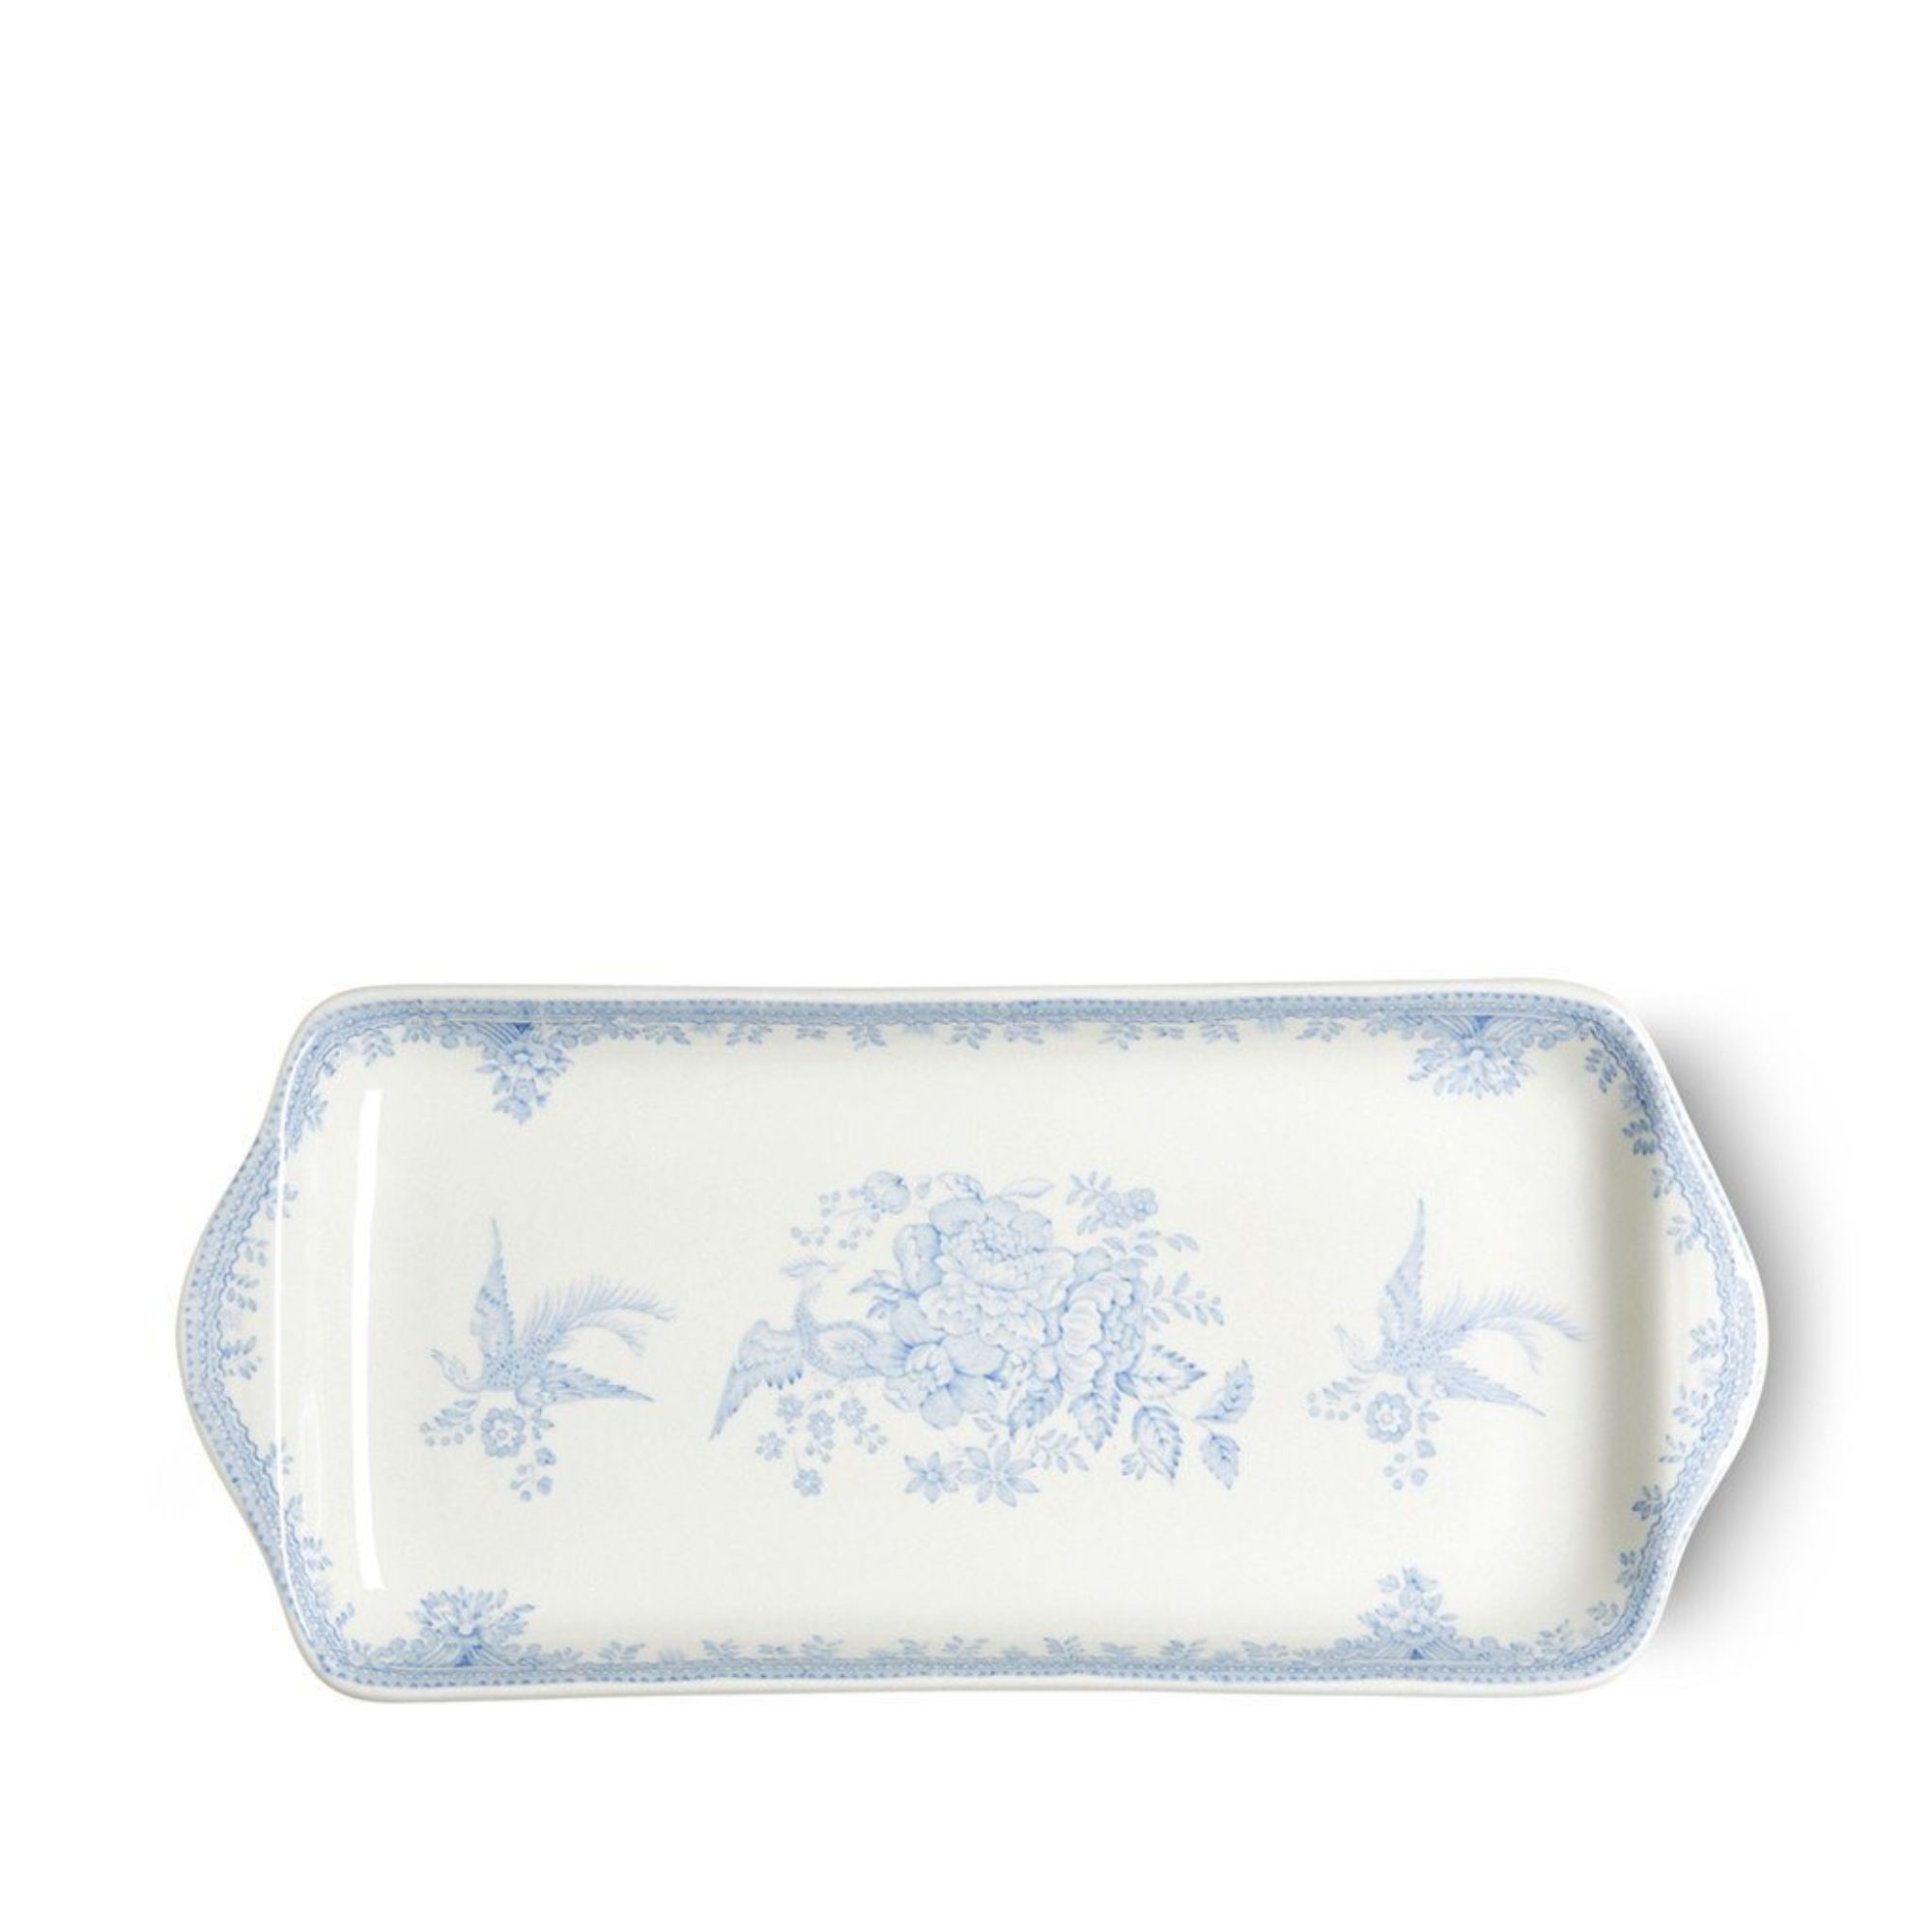 Rectangular Dessert Plate + Teacup // Set of 4 - Little White Dish - Touch  of Modern